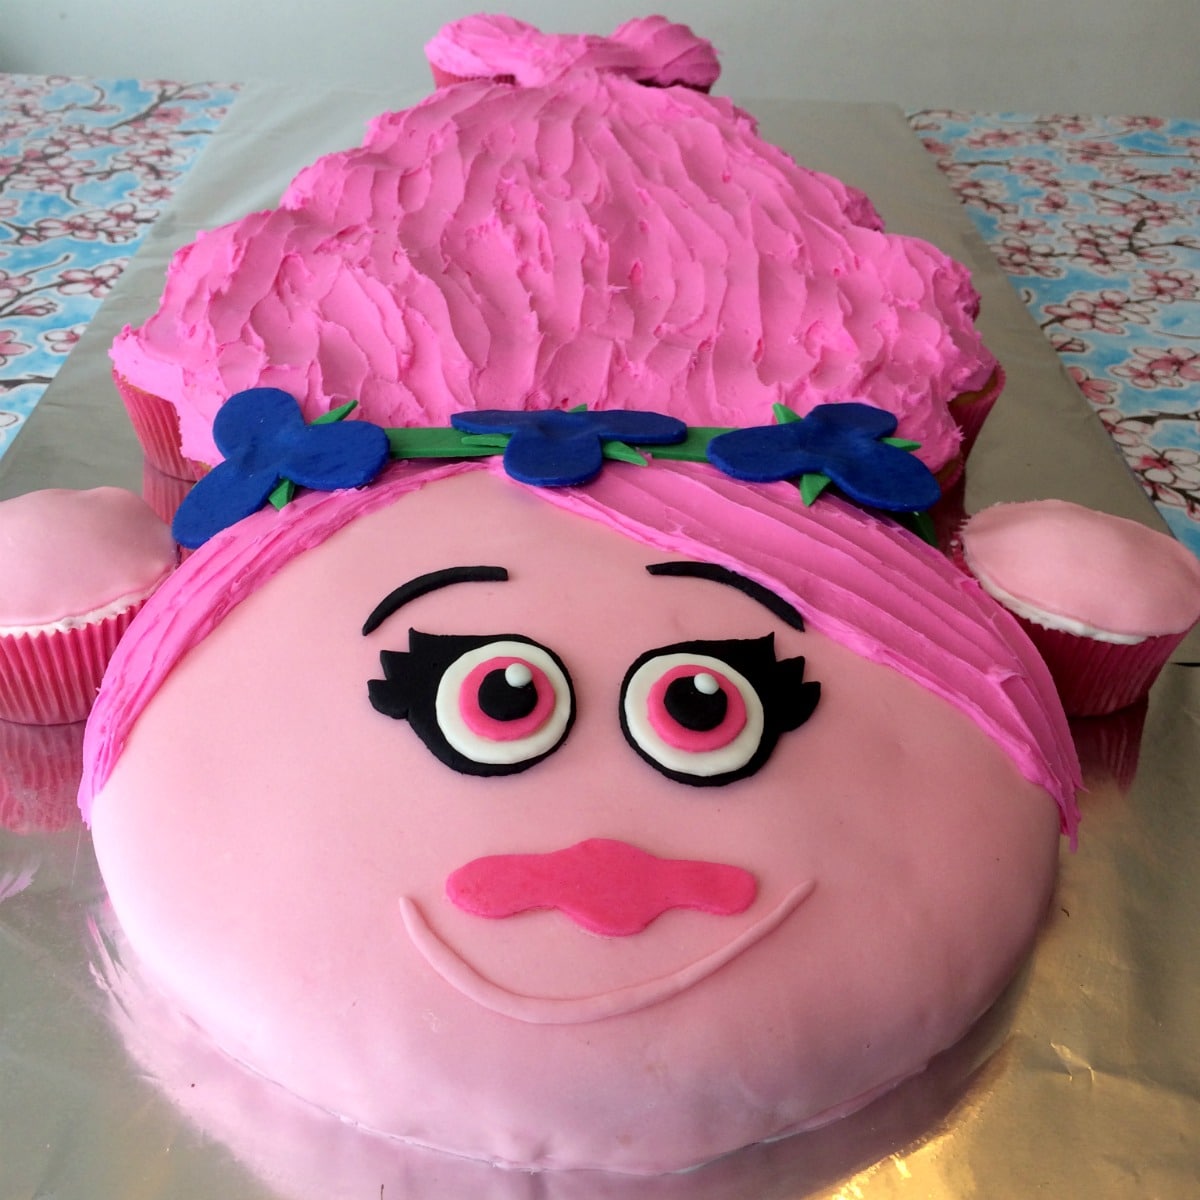  How to make a Princess Poppy cake with pull-apart cupcake hair: step by step tutorial to make a Trolls Princess Poppy Cake